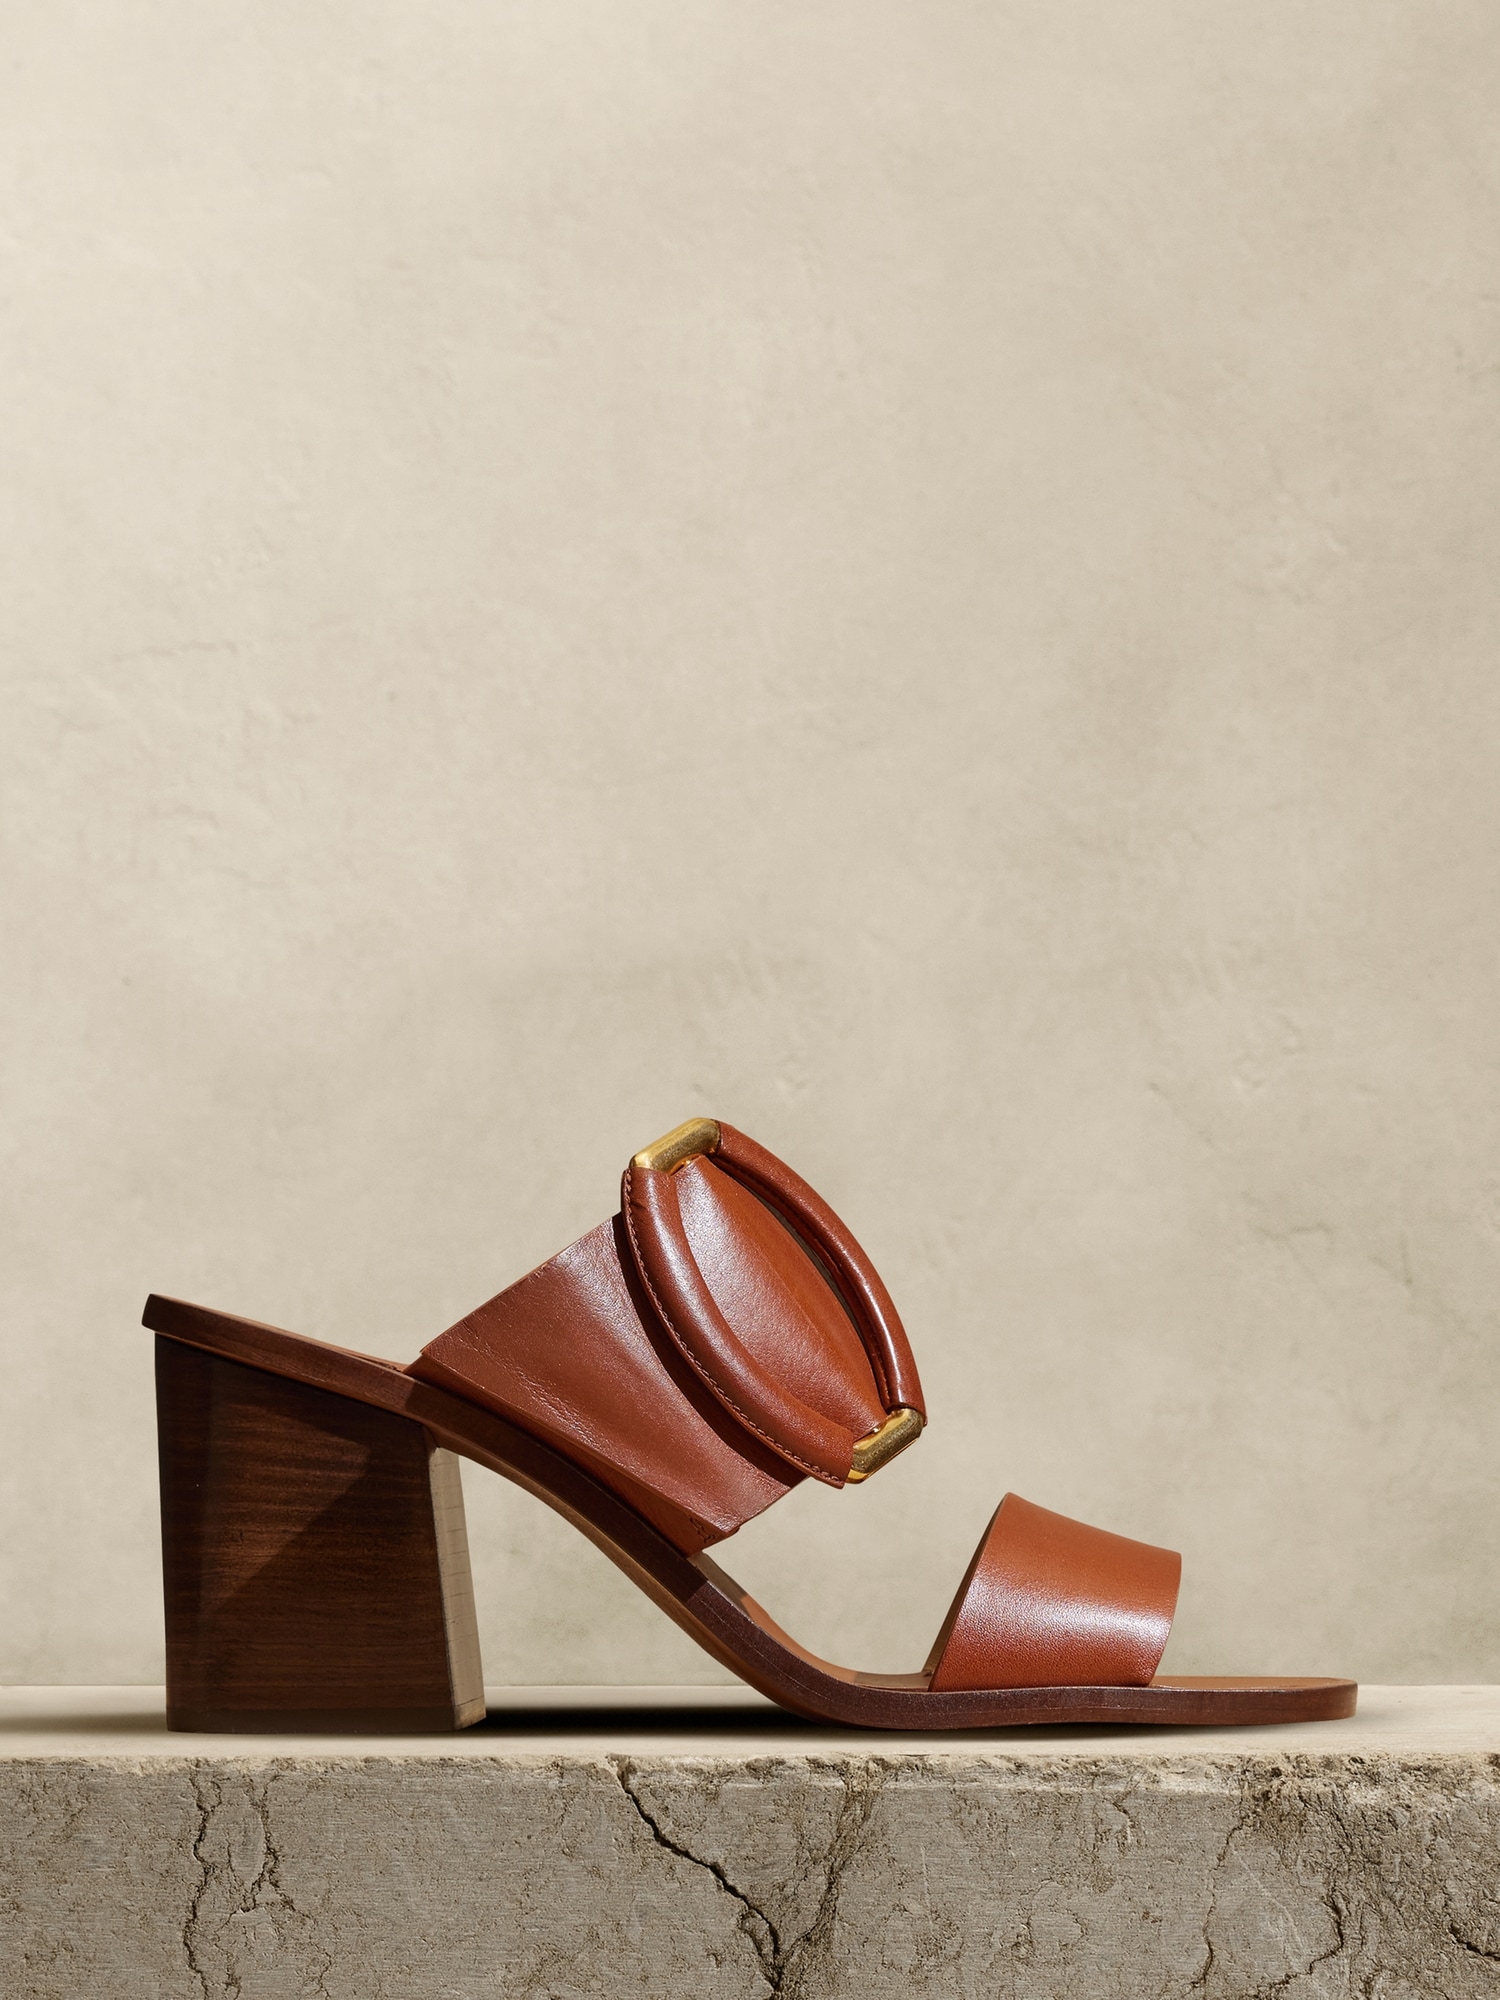 Italian leather Heels | Leather heels, Pointed toe heels, Heels shopping